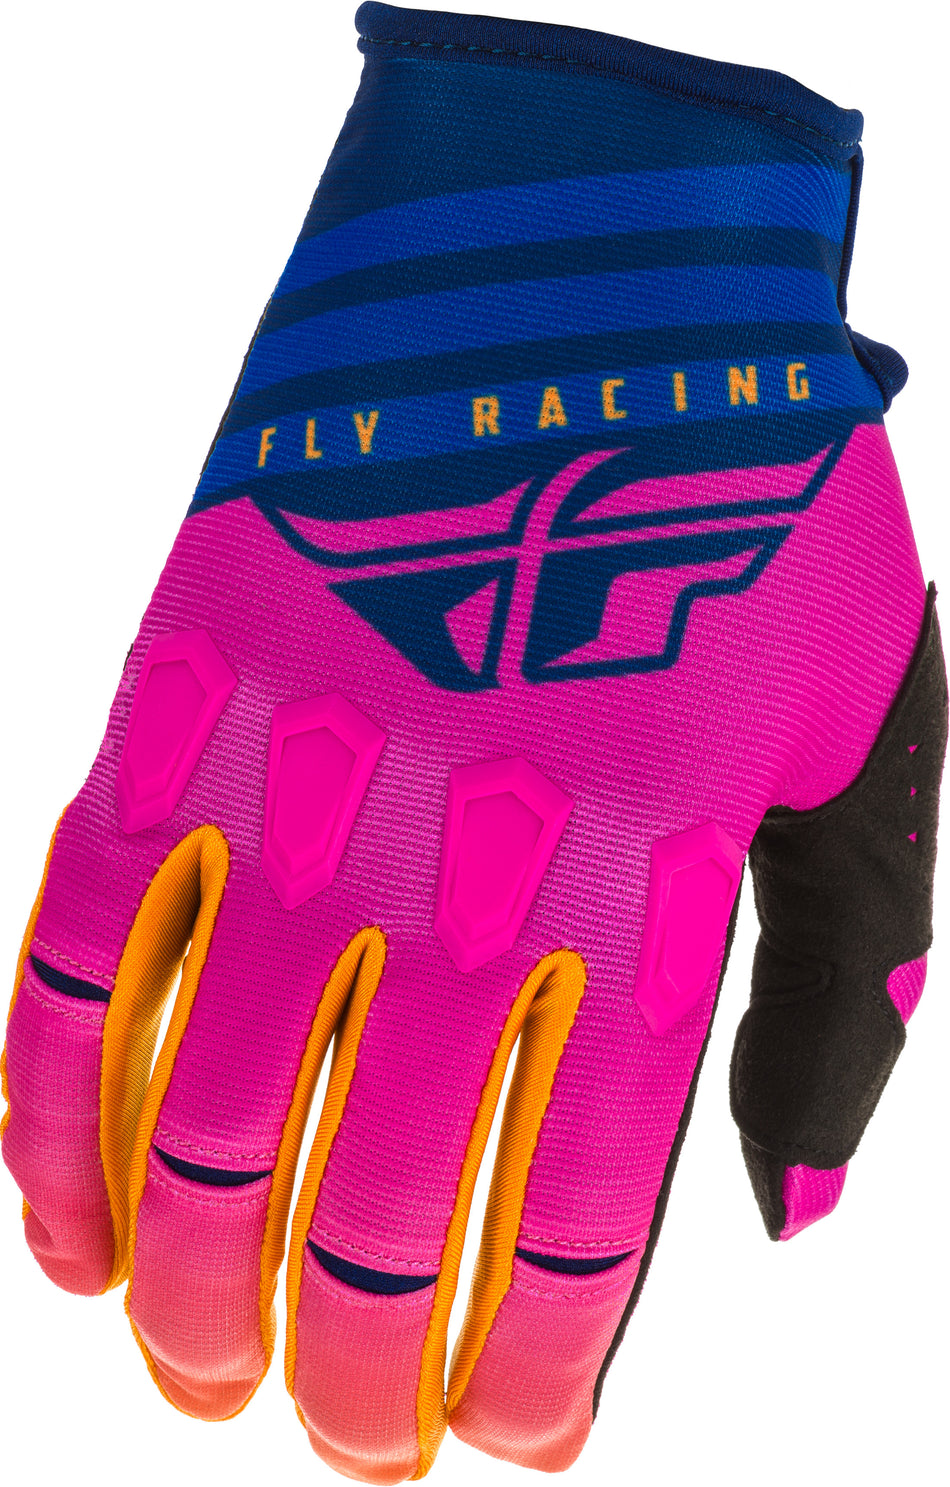 FLY RACING Kinetic K220 Gloves Midnight/Blue/Orange Sz 10 373-51910